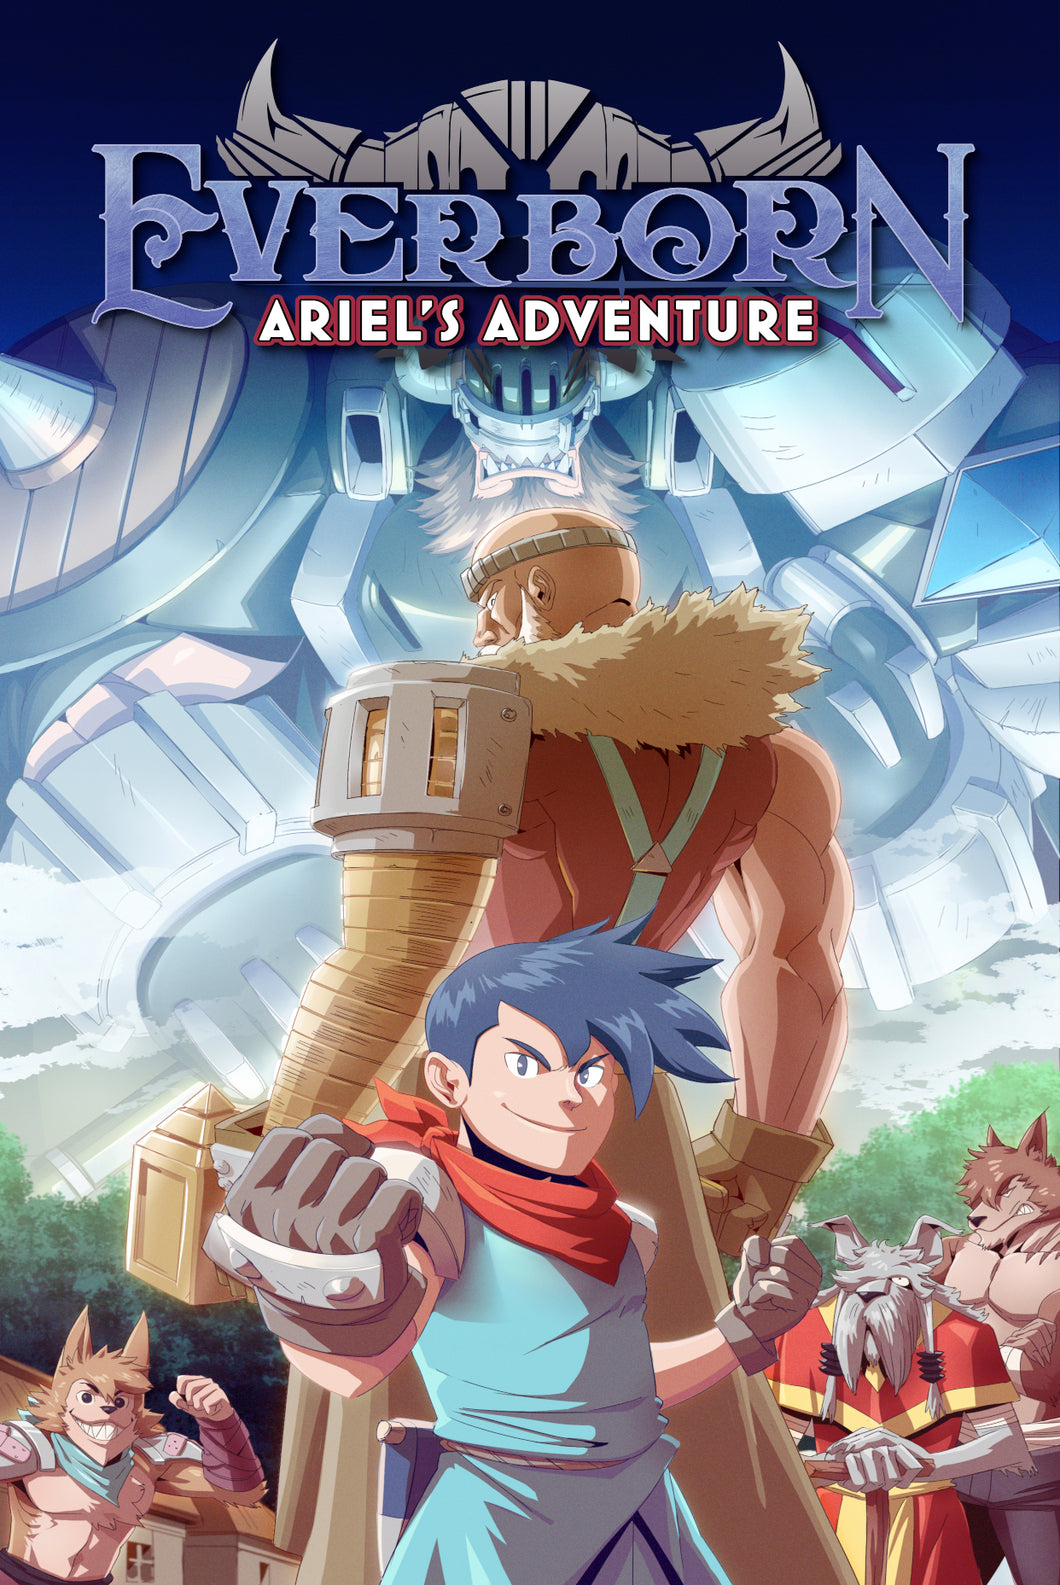 Everborn: Ariel's Adventure - Chapter 1